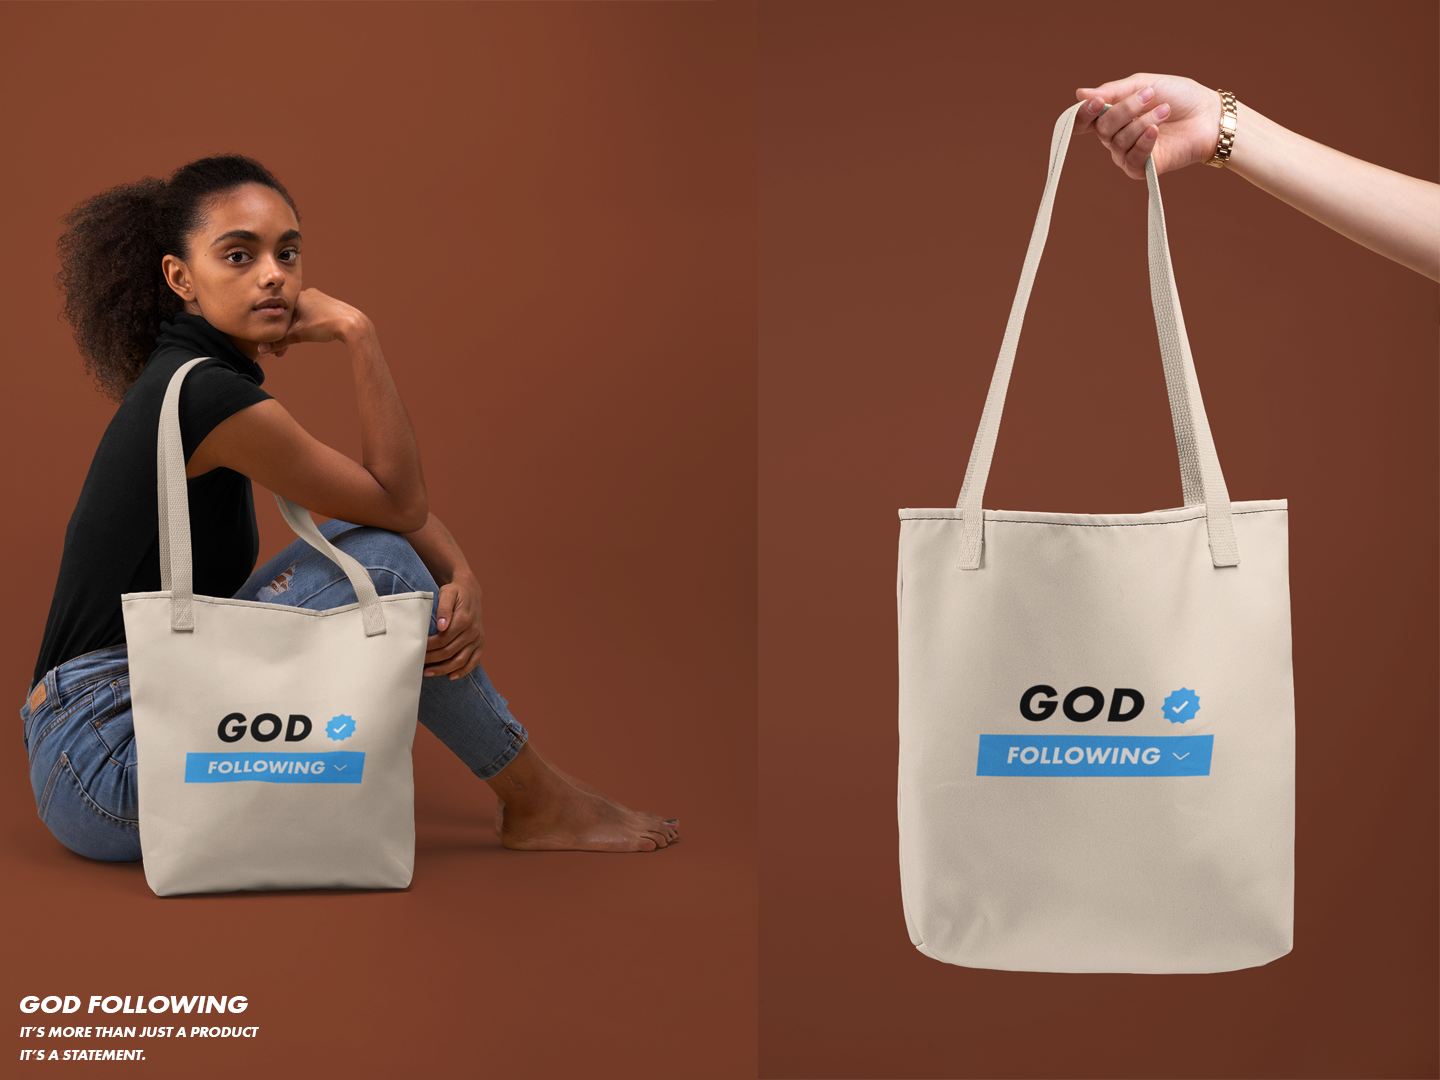 God following clothing brand